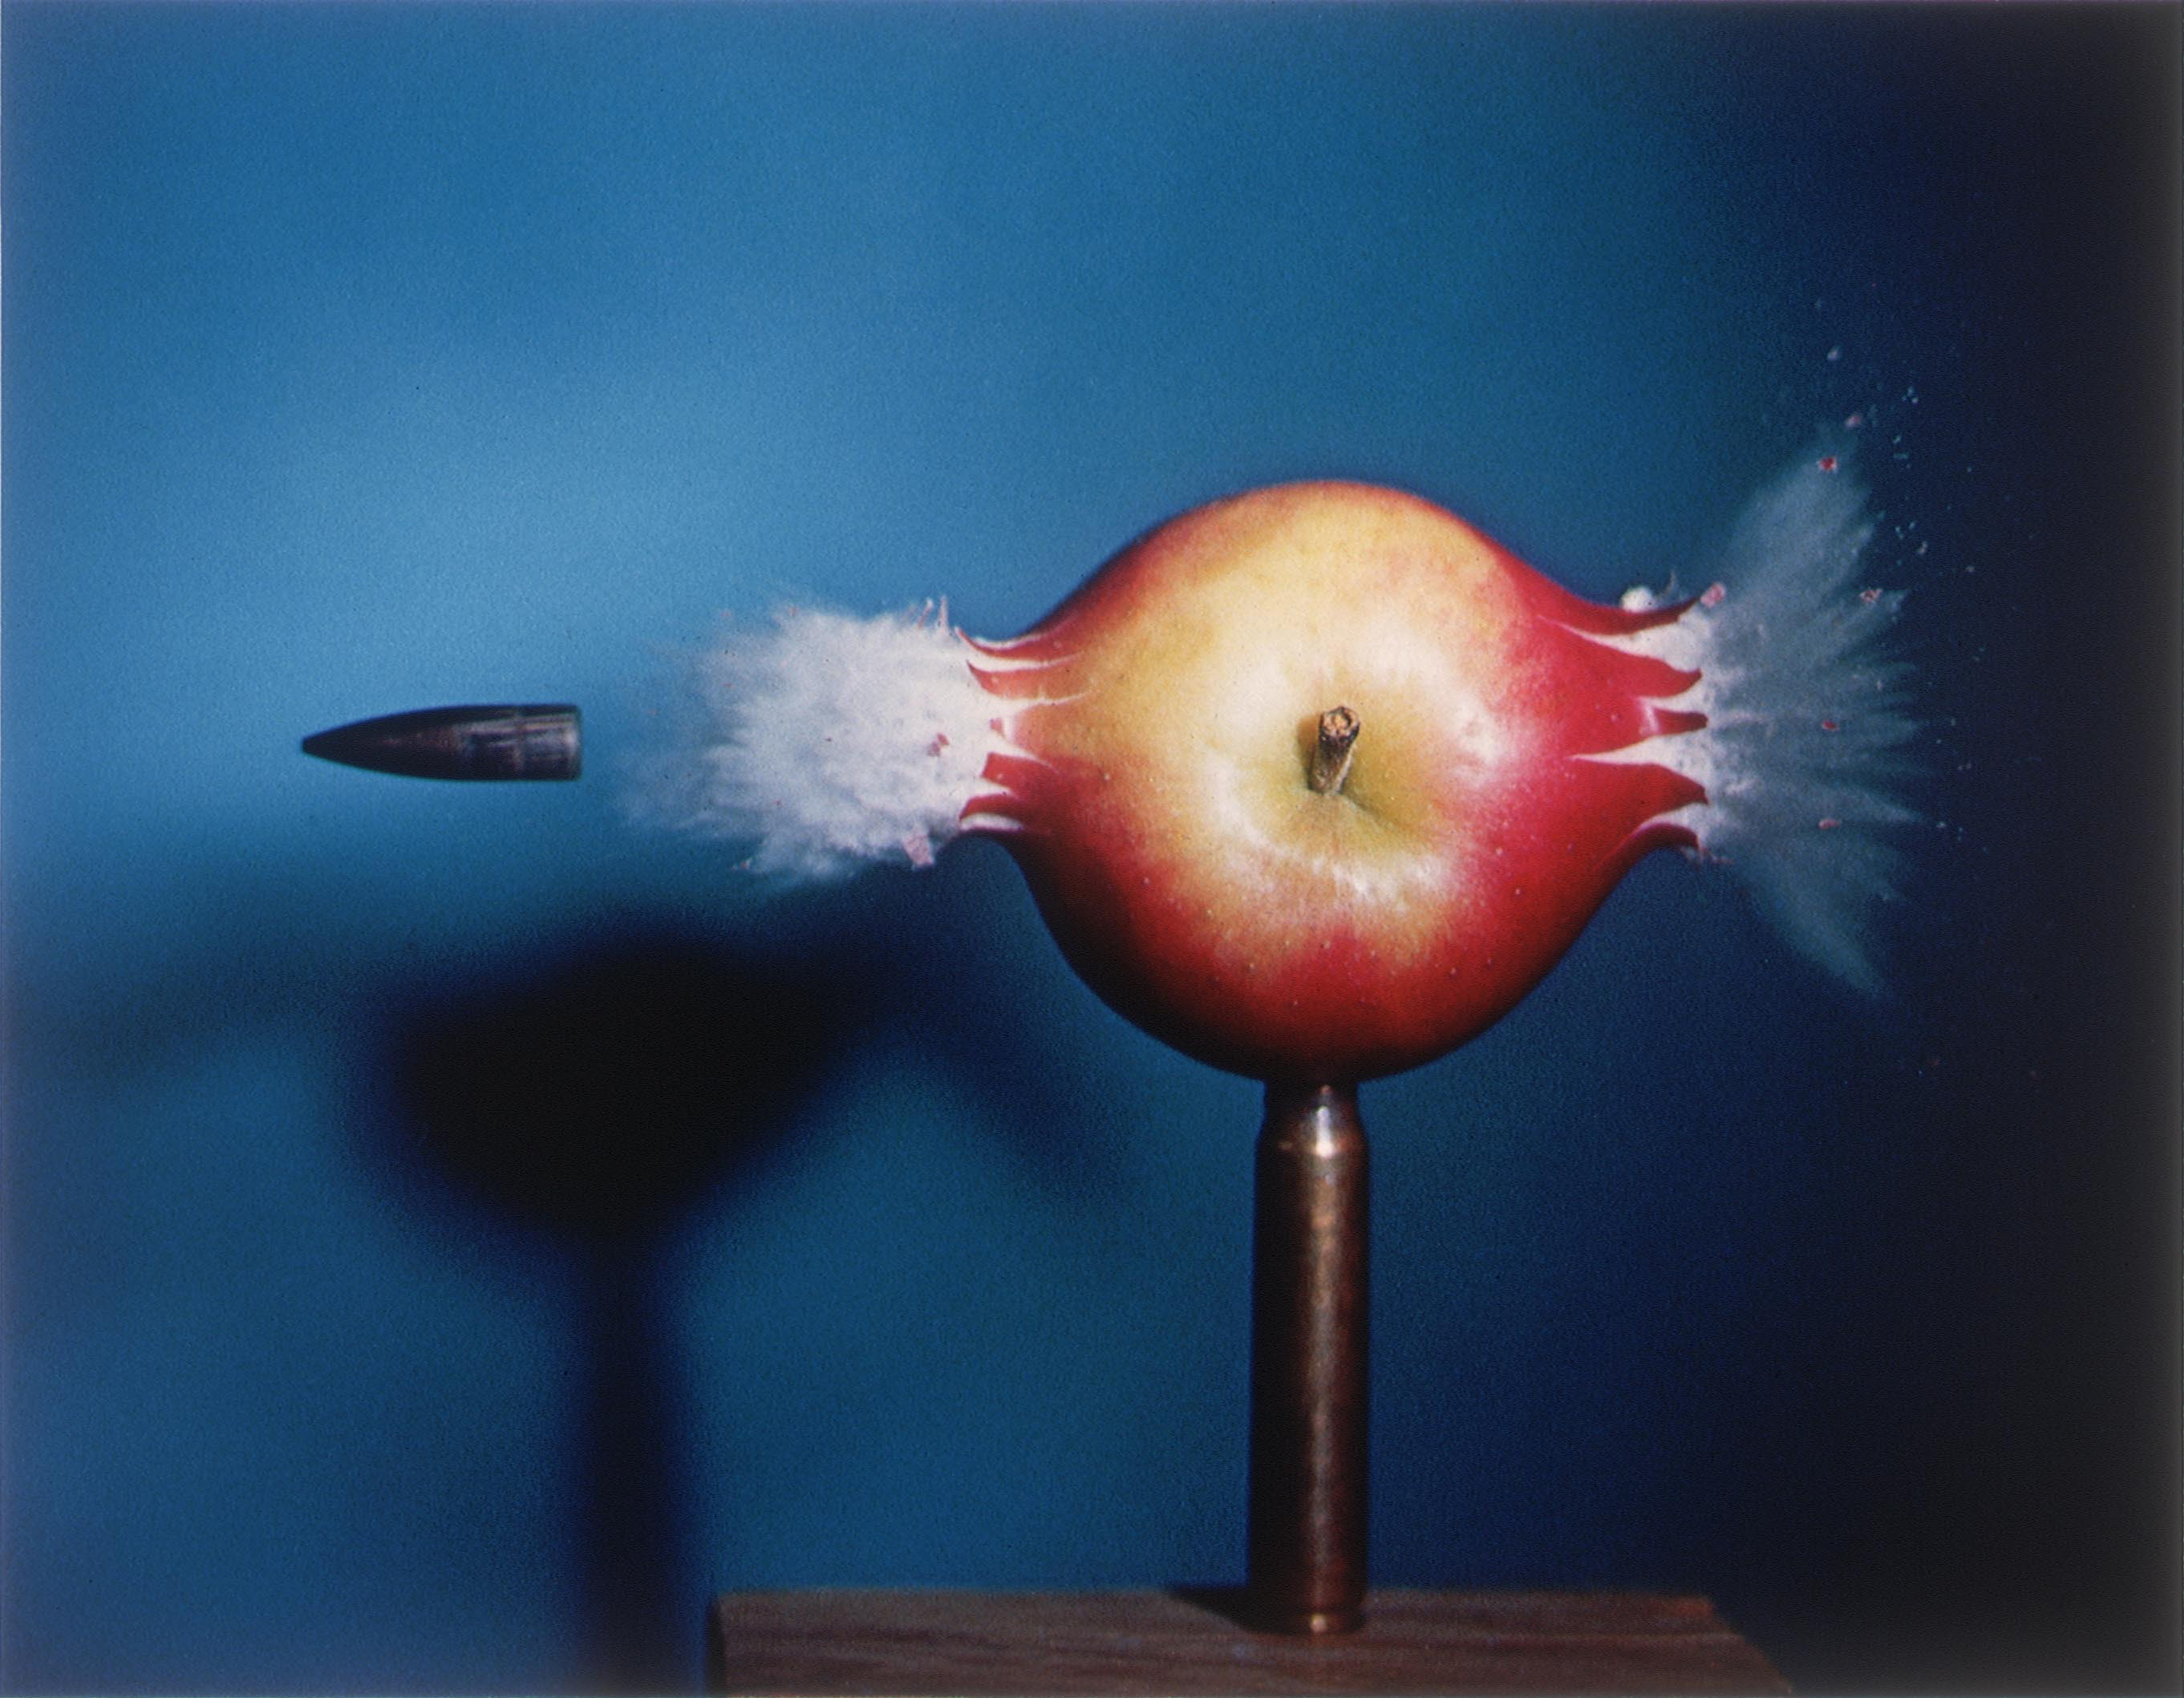 Bullet striking through a red apple.